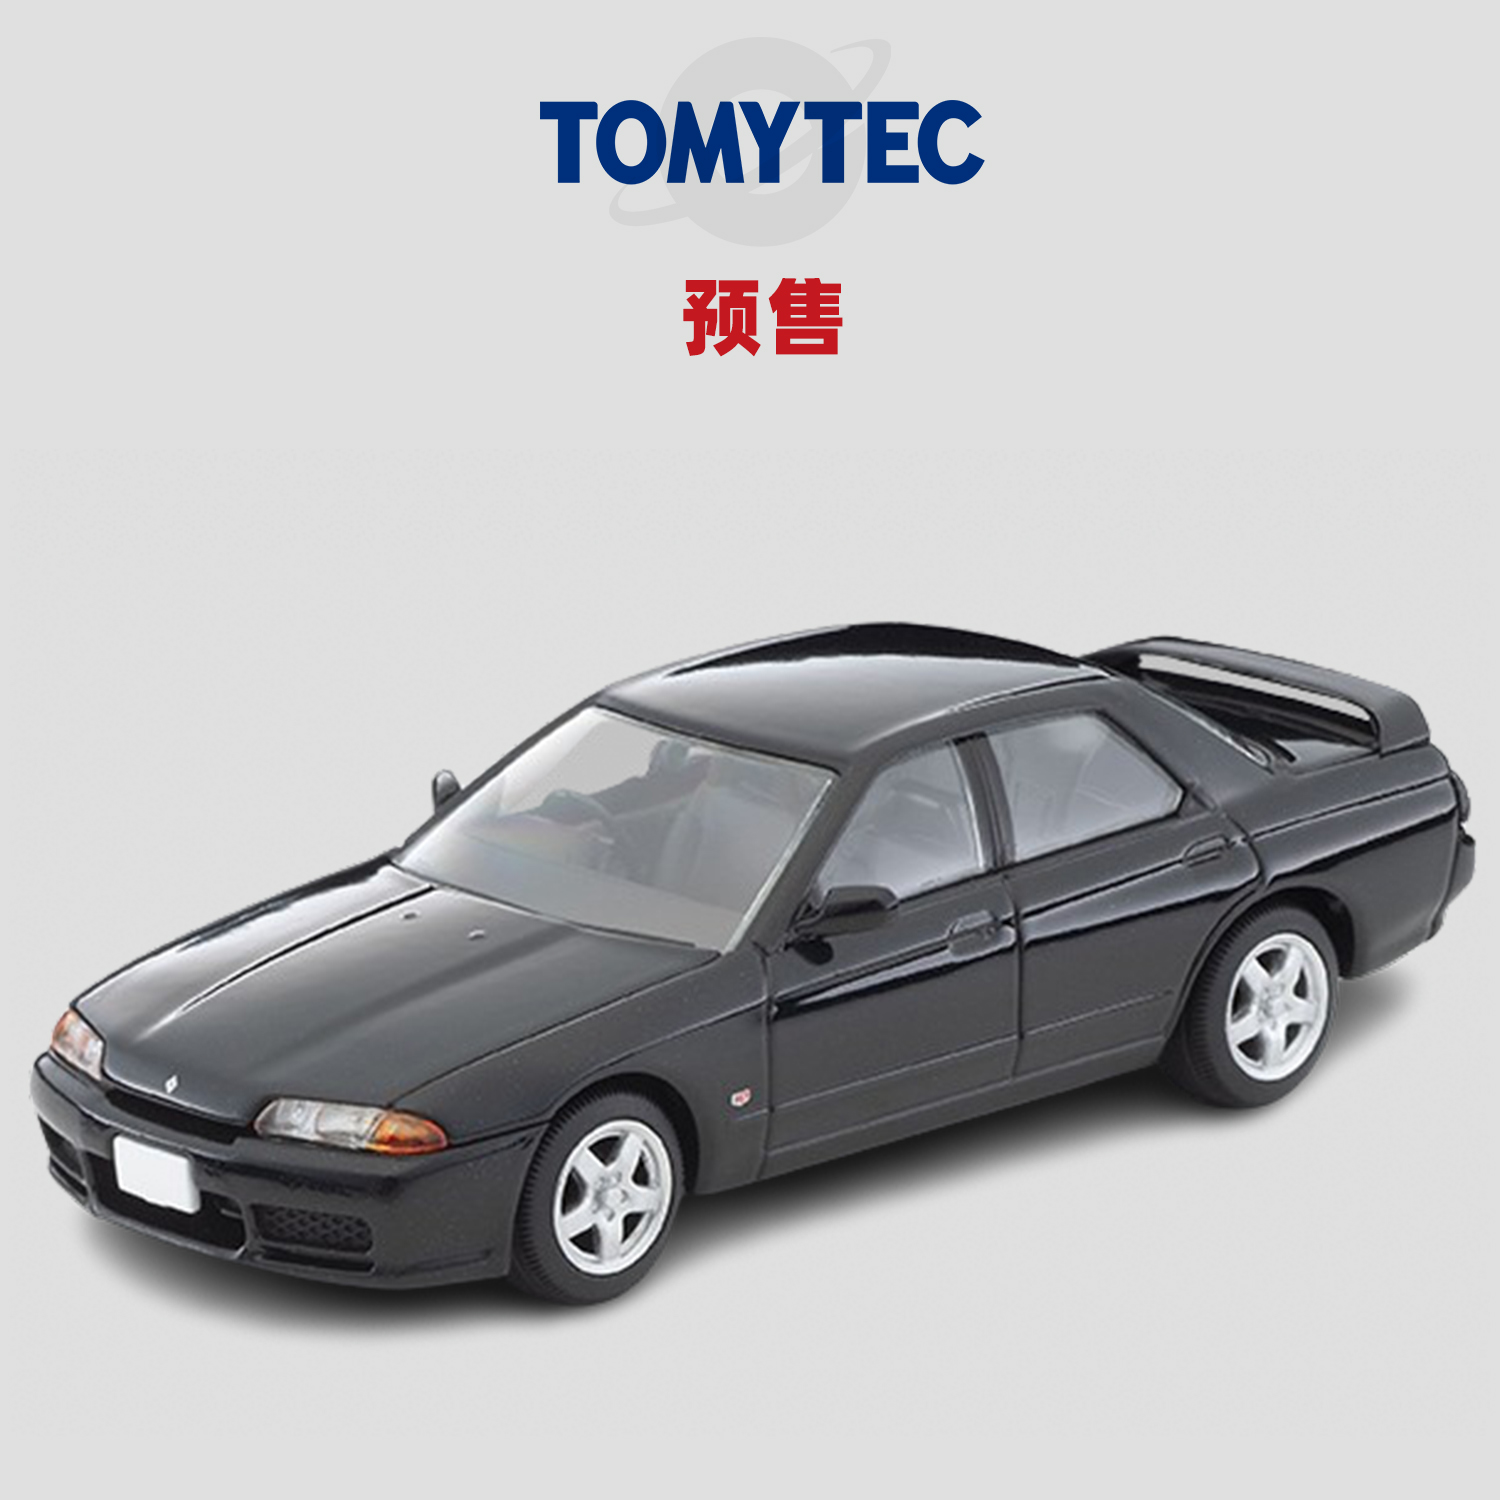 [Oseky]TOMYTEC TLV 5月 LV-N194c 日产 Skyline 4Door Sport GTS 模玩/动漫/周边/娃圈三坑/桌游 火车/摩托/汽车模型 原图主图